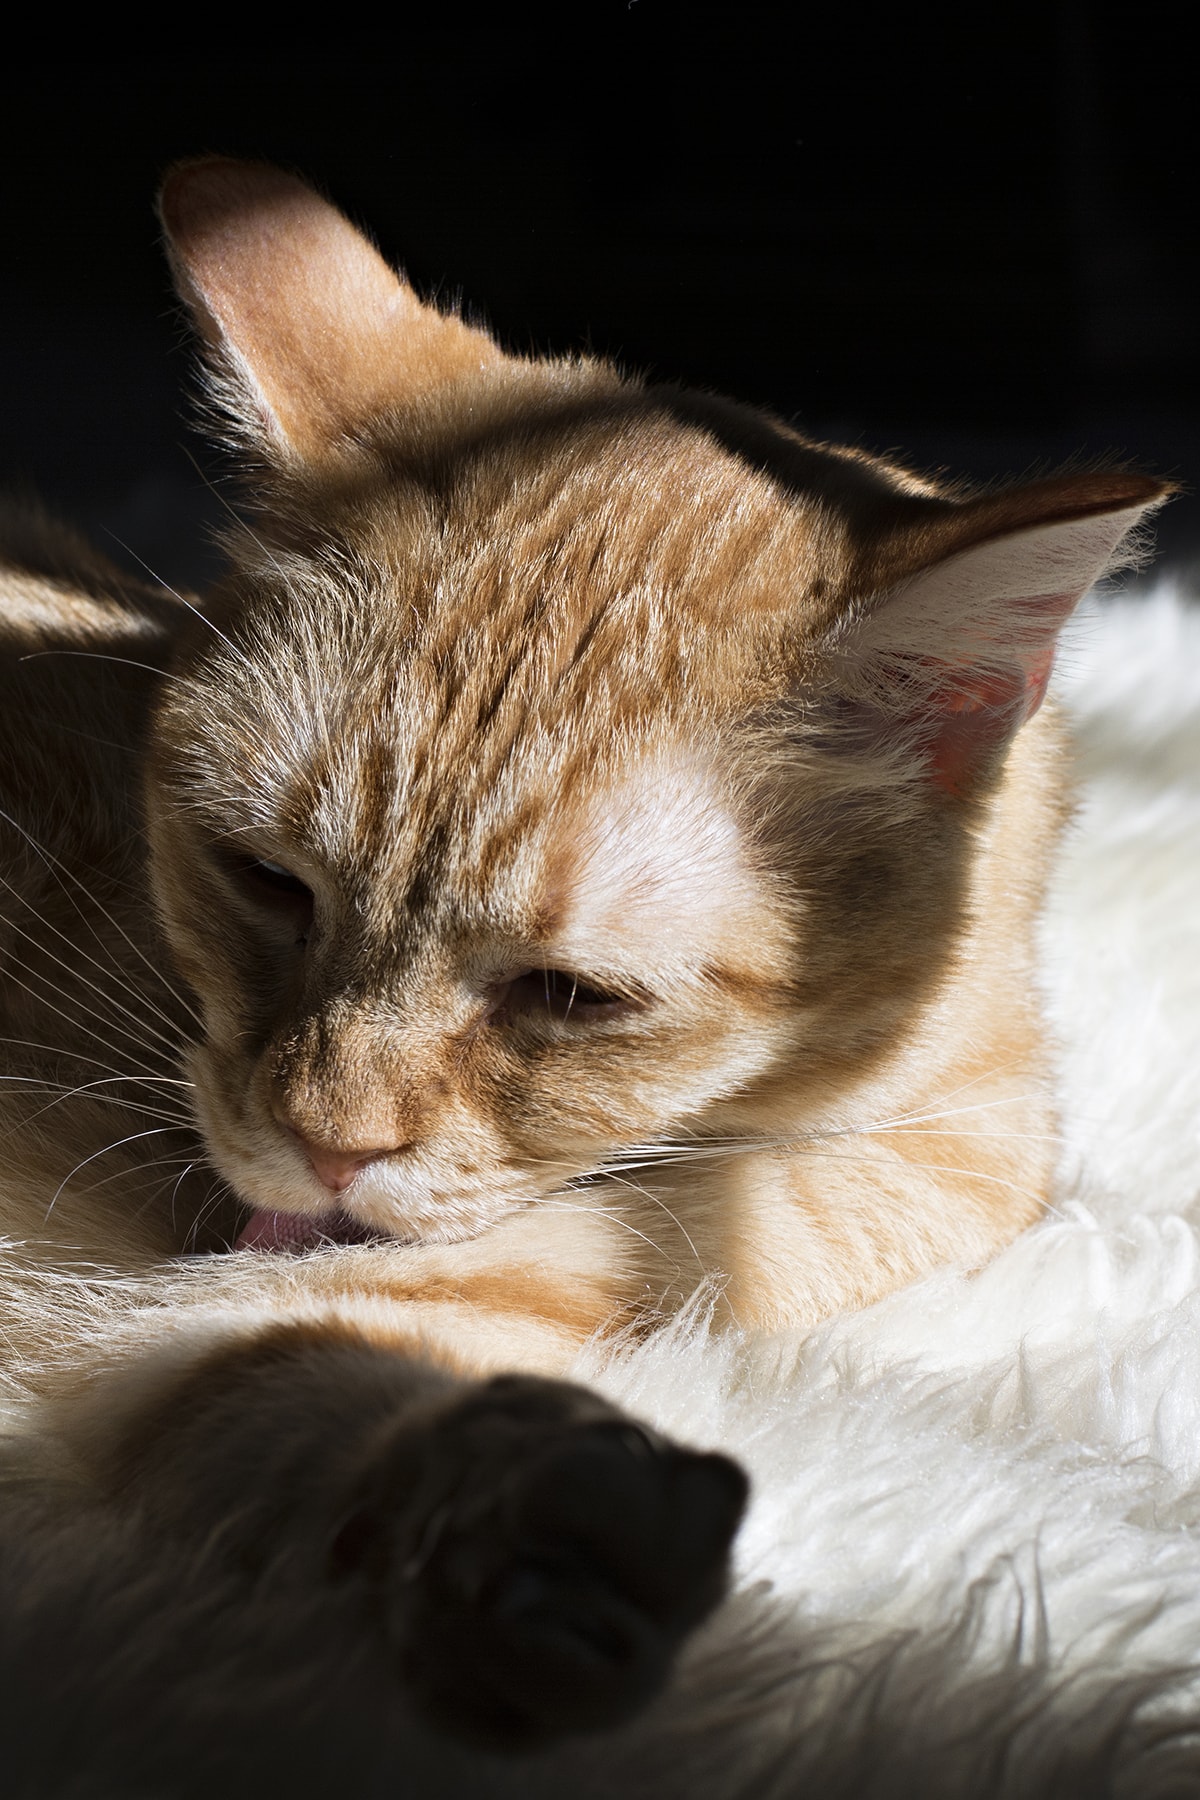 our orange tabby cat grooming herself on shag rug